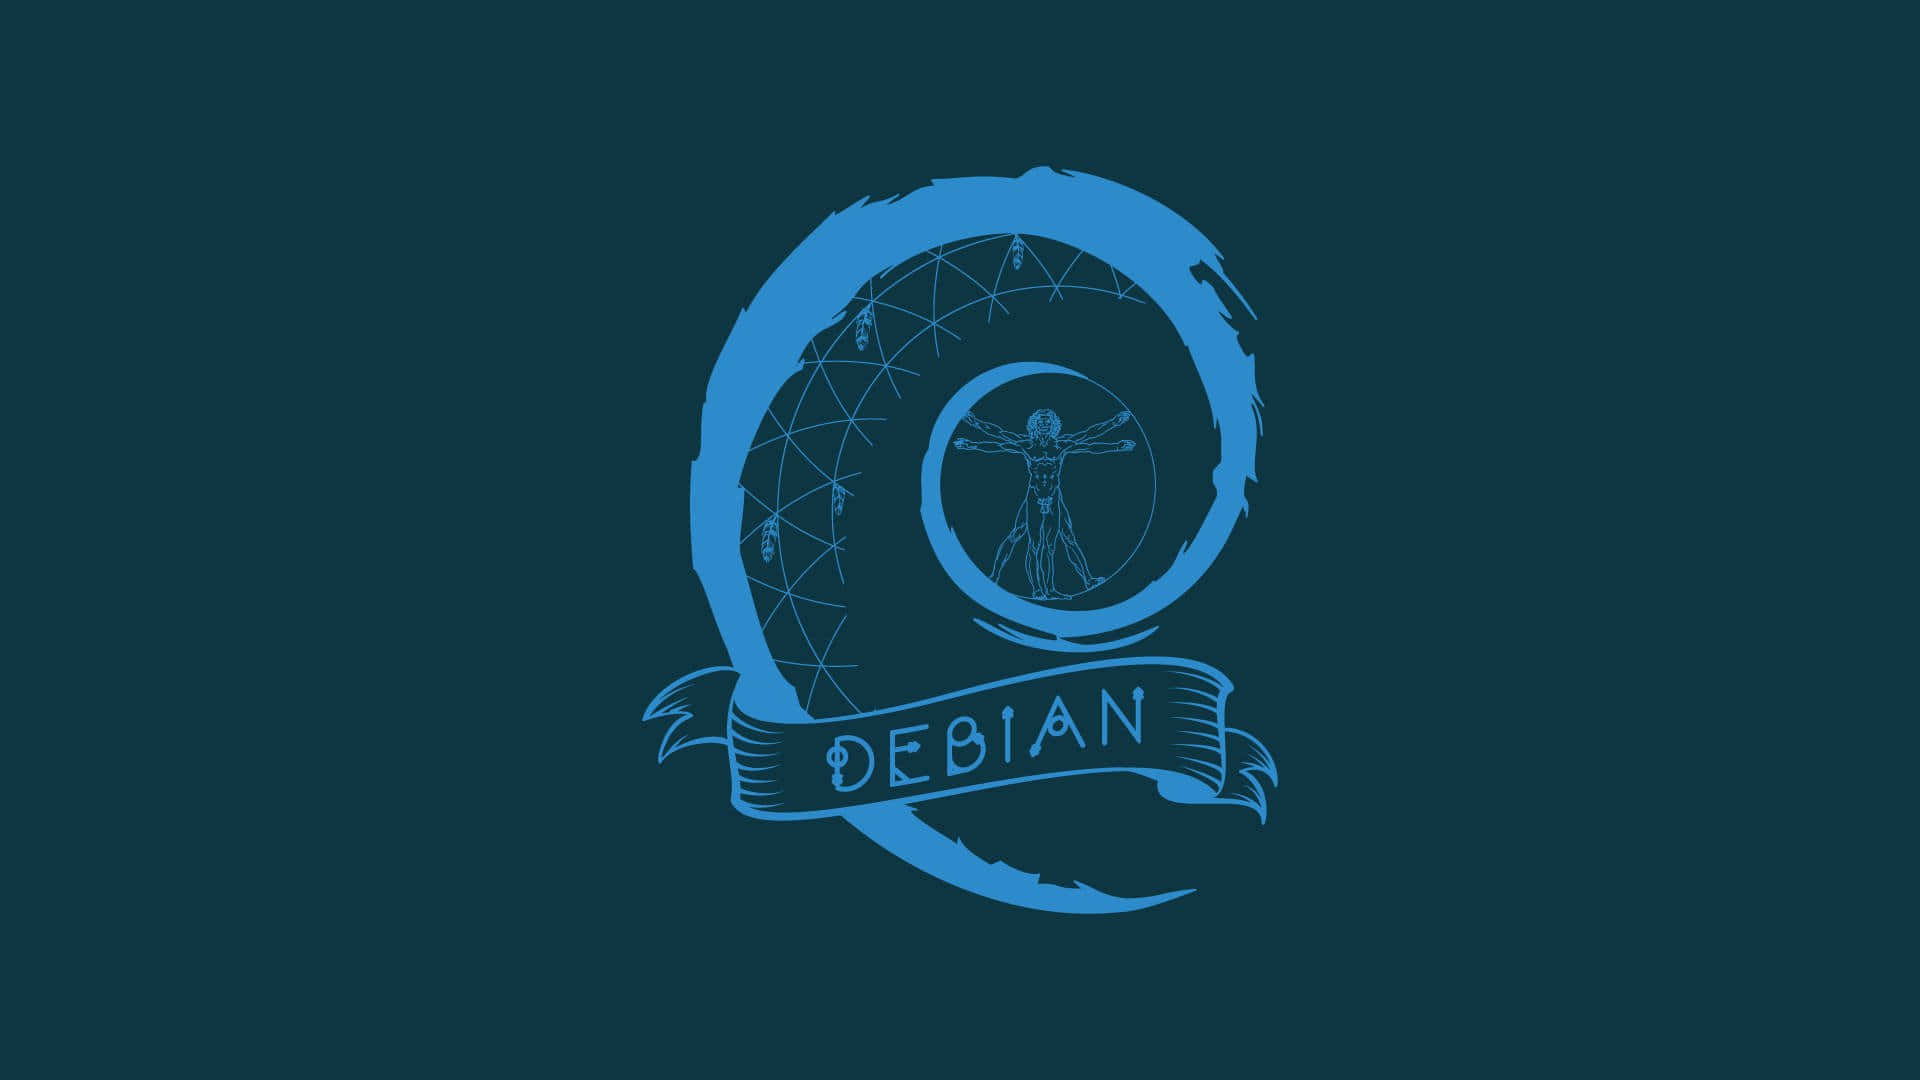 Debian Logo Dark Background Wallpaper